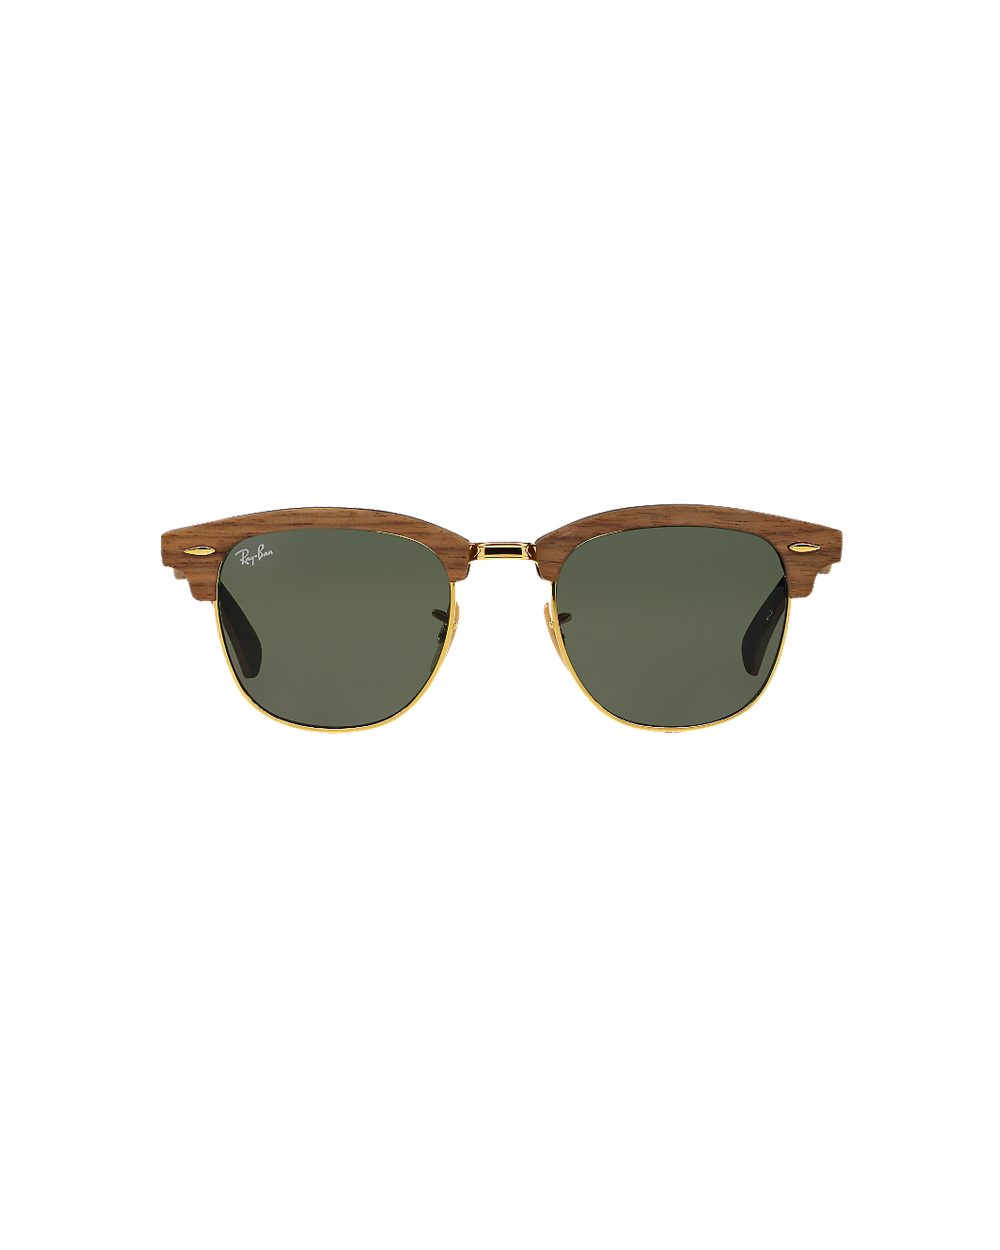 RayBan Clubmaster Wood sunglasses